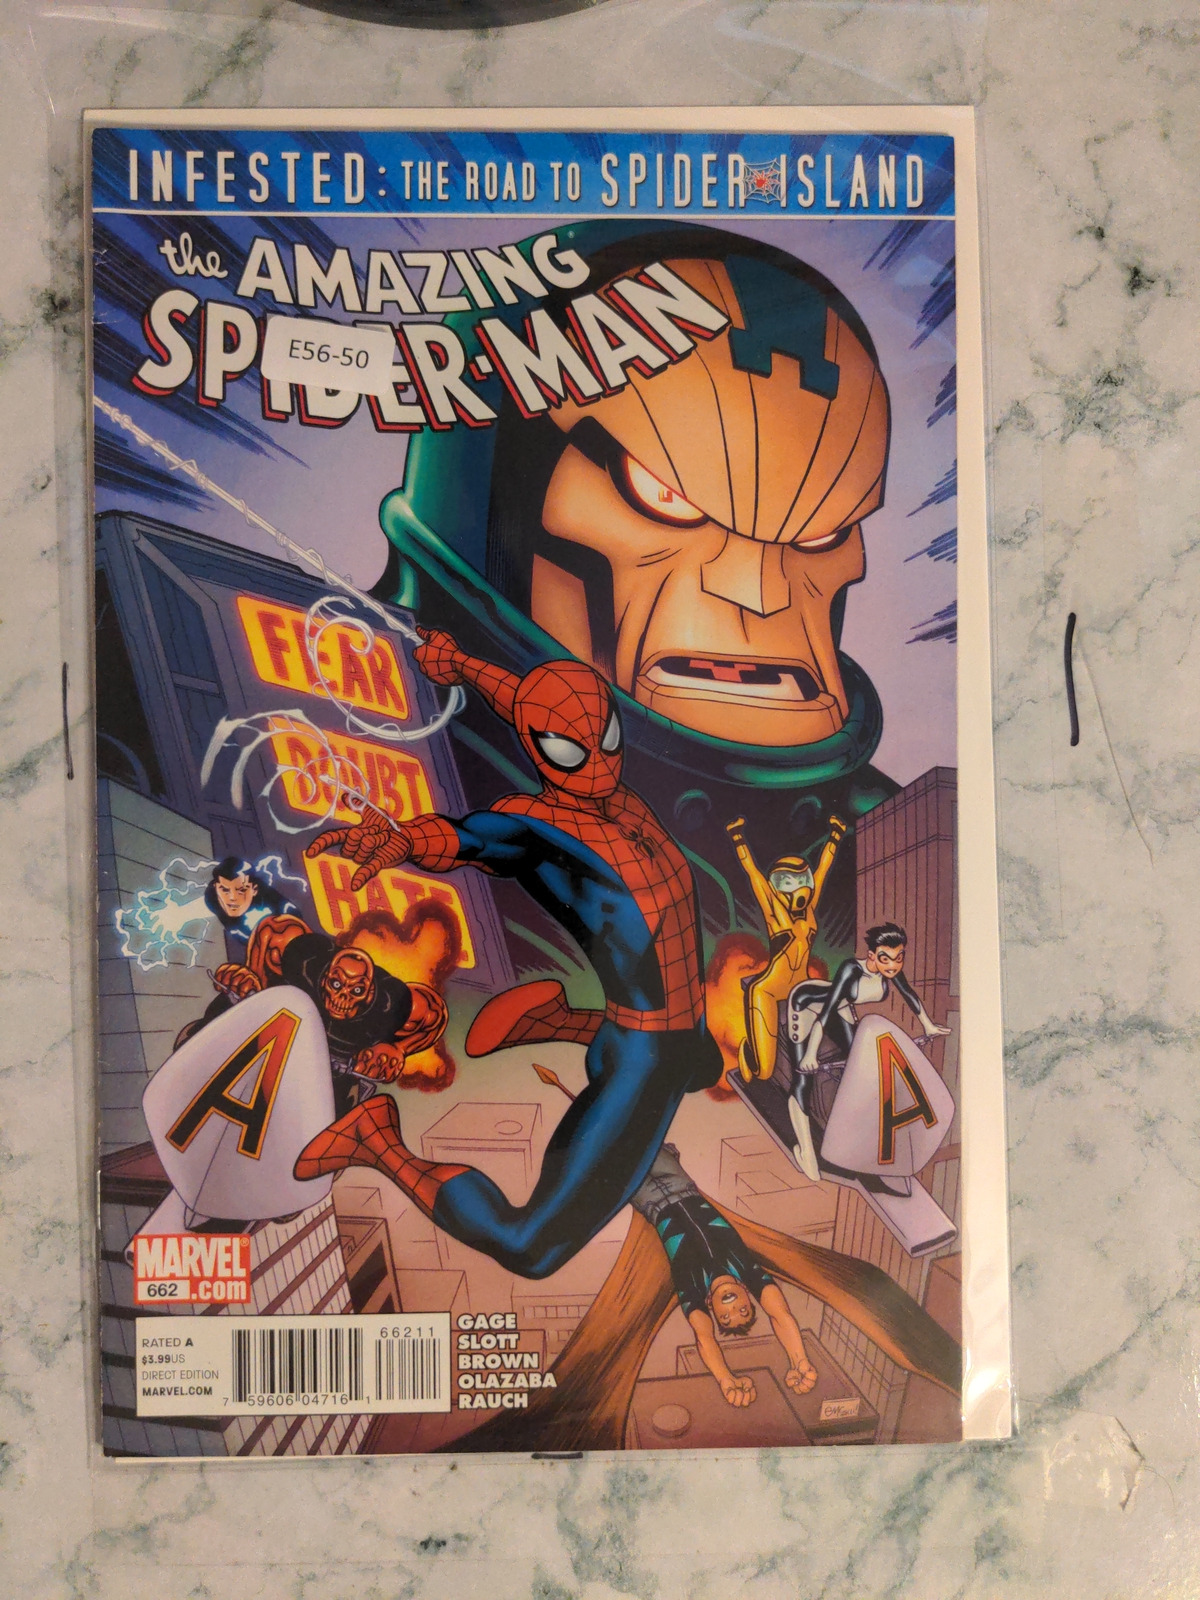 AMAZING SPIDER-MAN #662 VOL. 1 8.0 1ST APP MARVEL COMIC BOOK E56-50